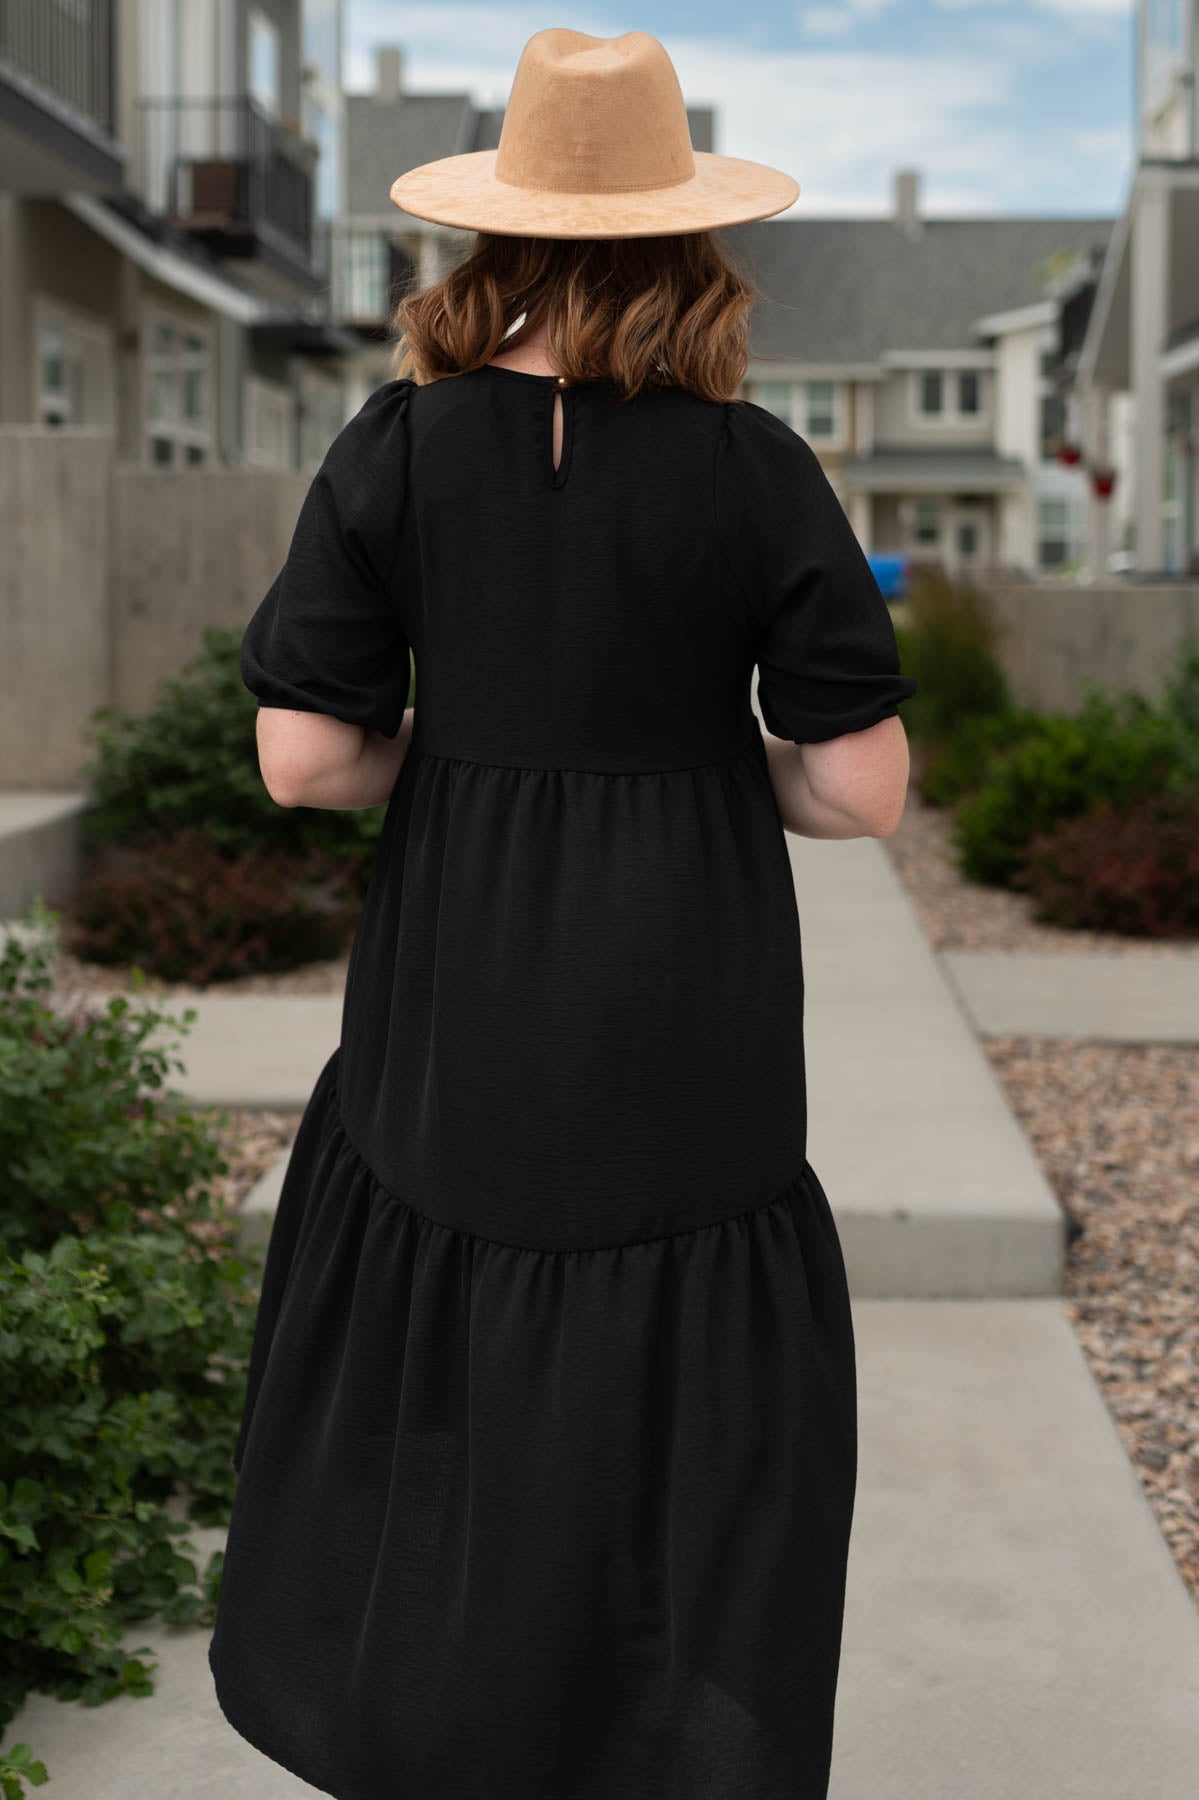 Back view of the Brooklynn black dress